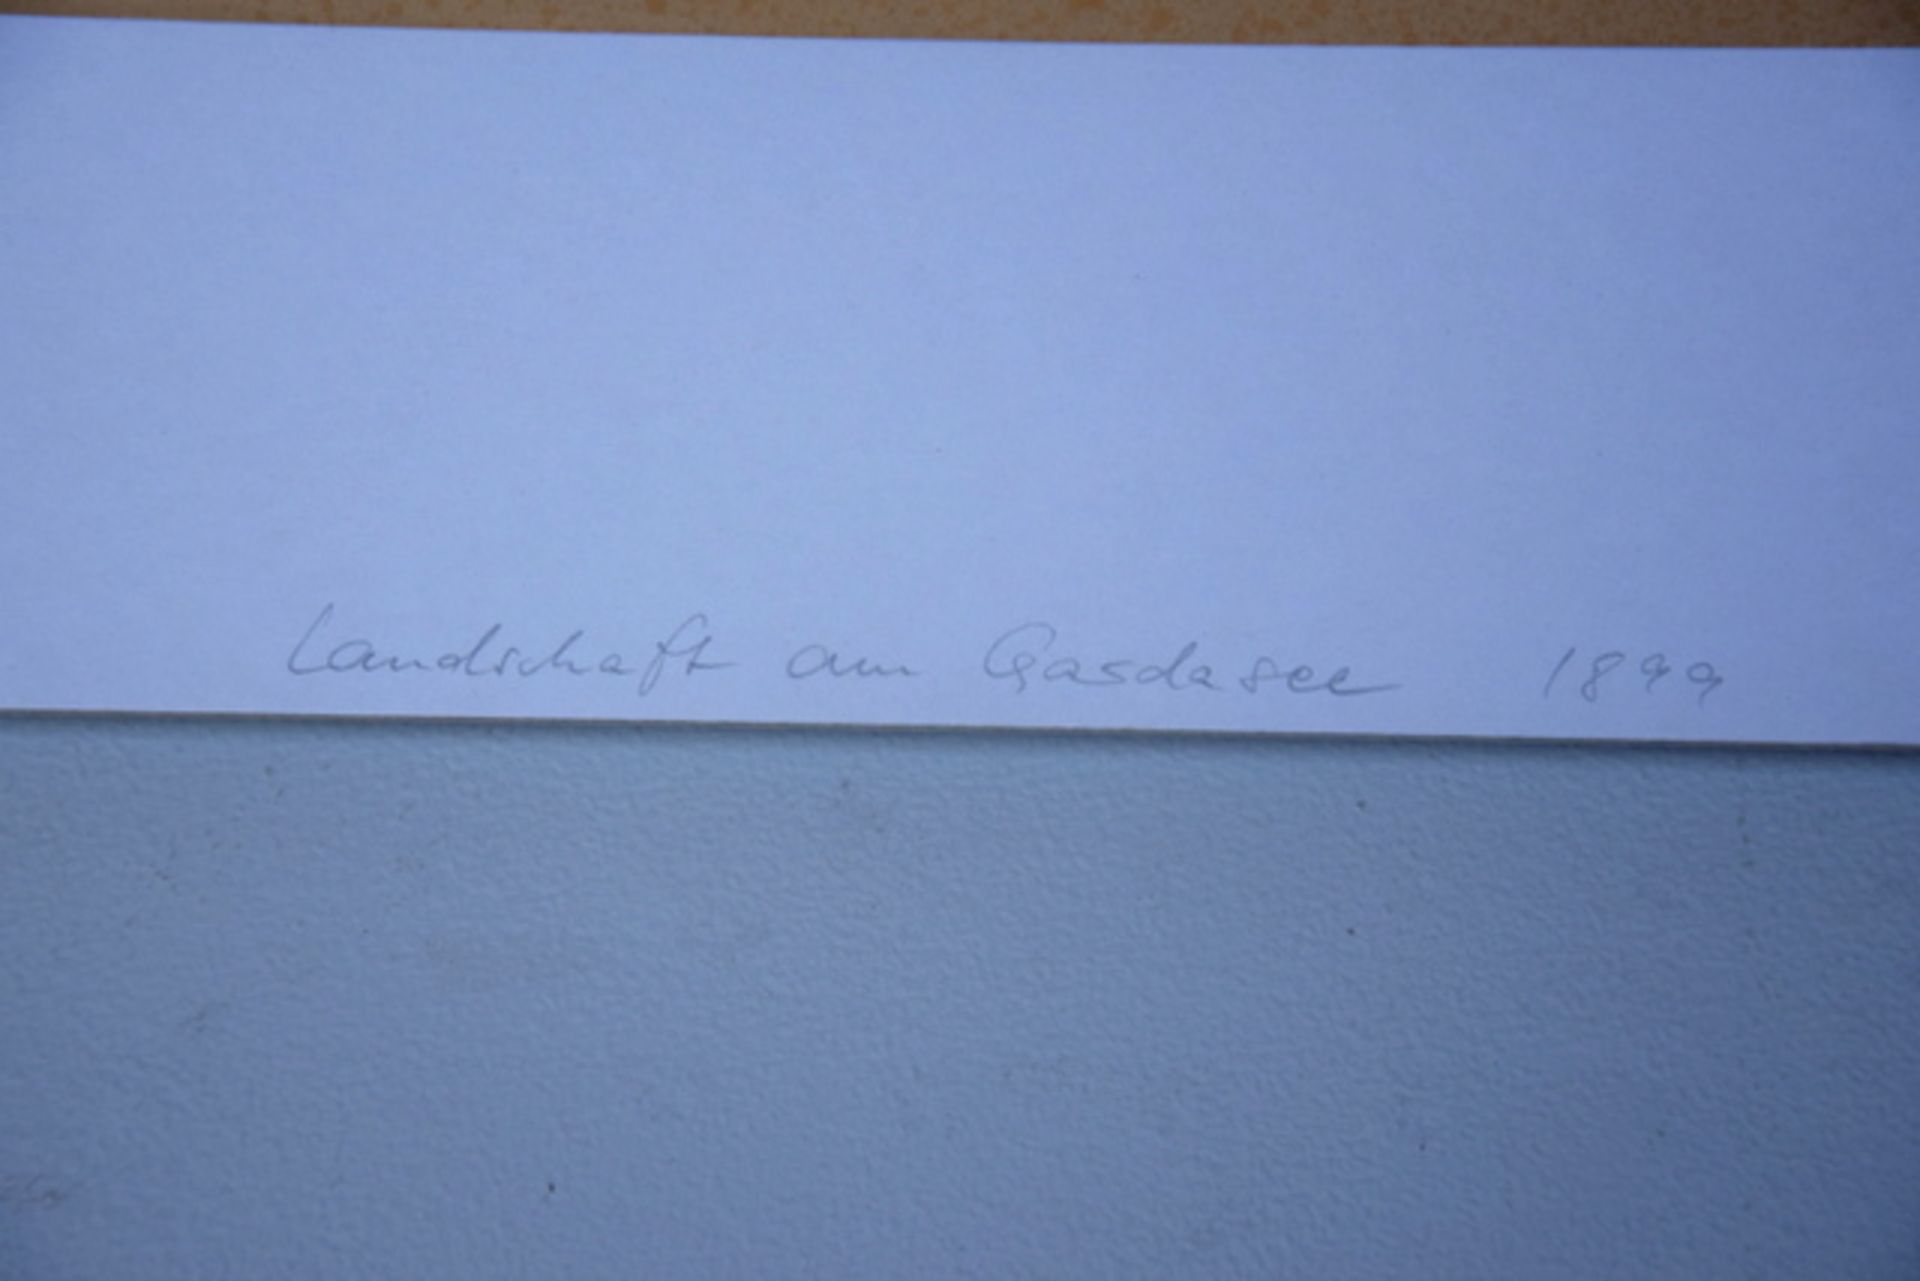 Landschaft am Gardasee, dat. (18)99,Kreide auf Papier, datiert unten rechts "10. april 99", mit - Image 3 of 3